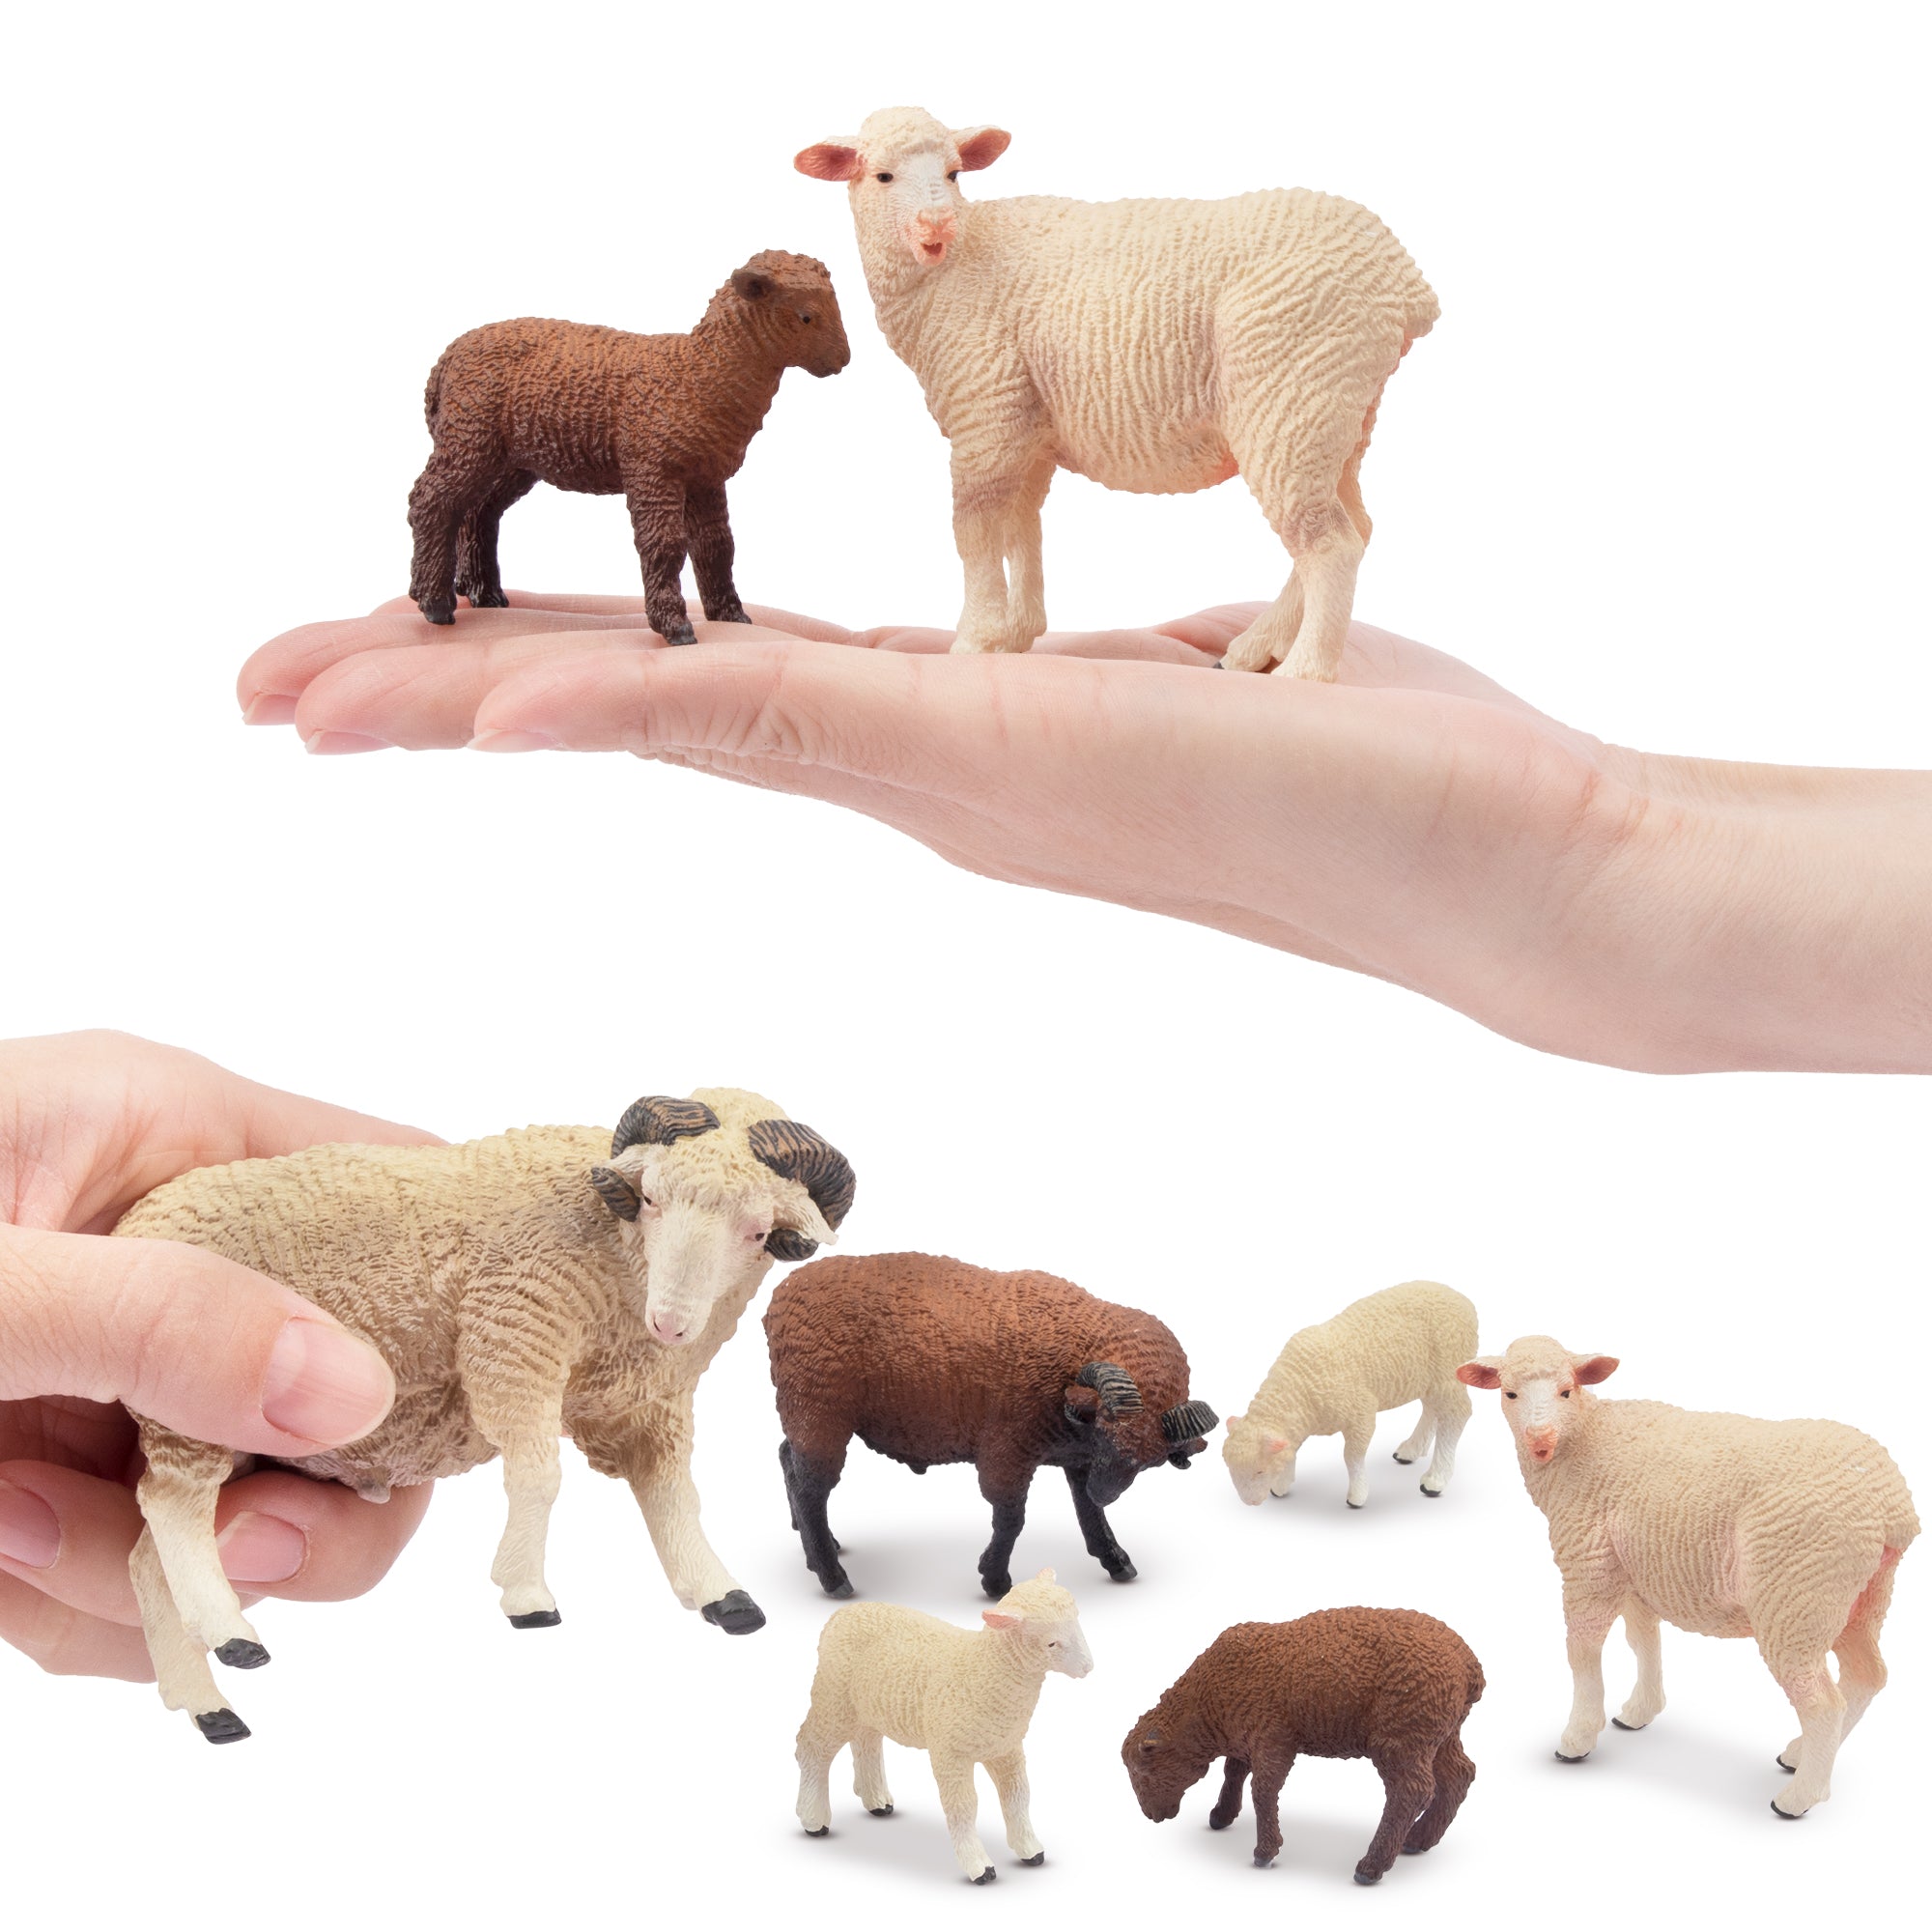 8-Piece Merino Sheep Figurines Playset with Adult & Baby Sheep-on hand